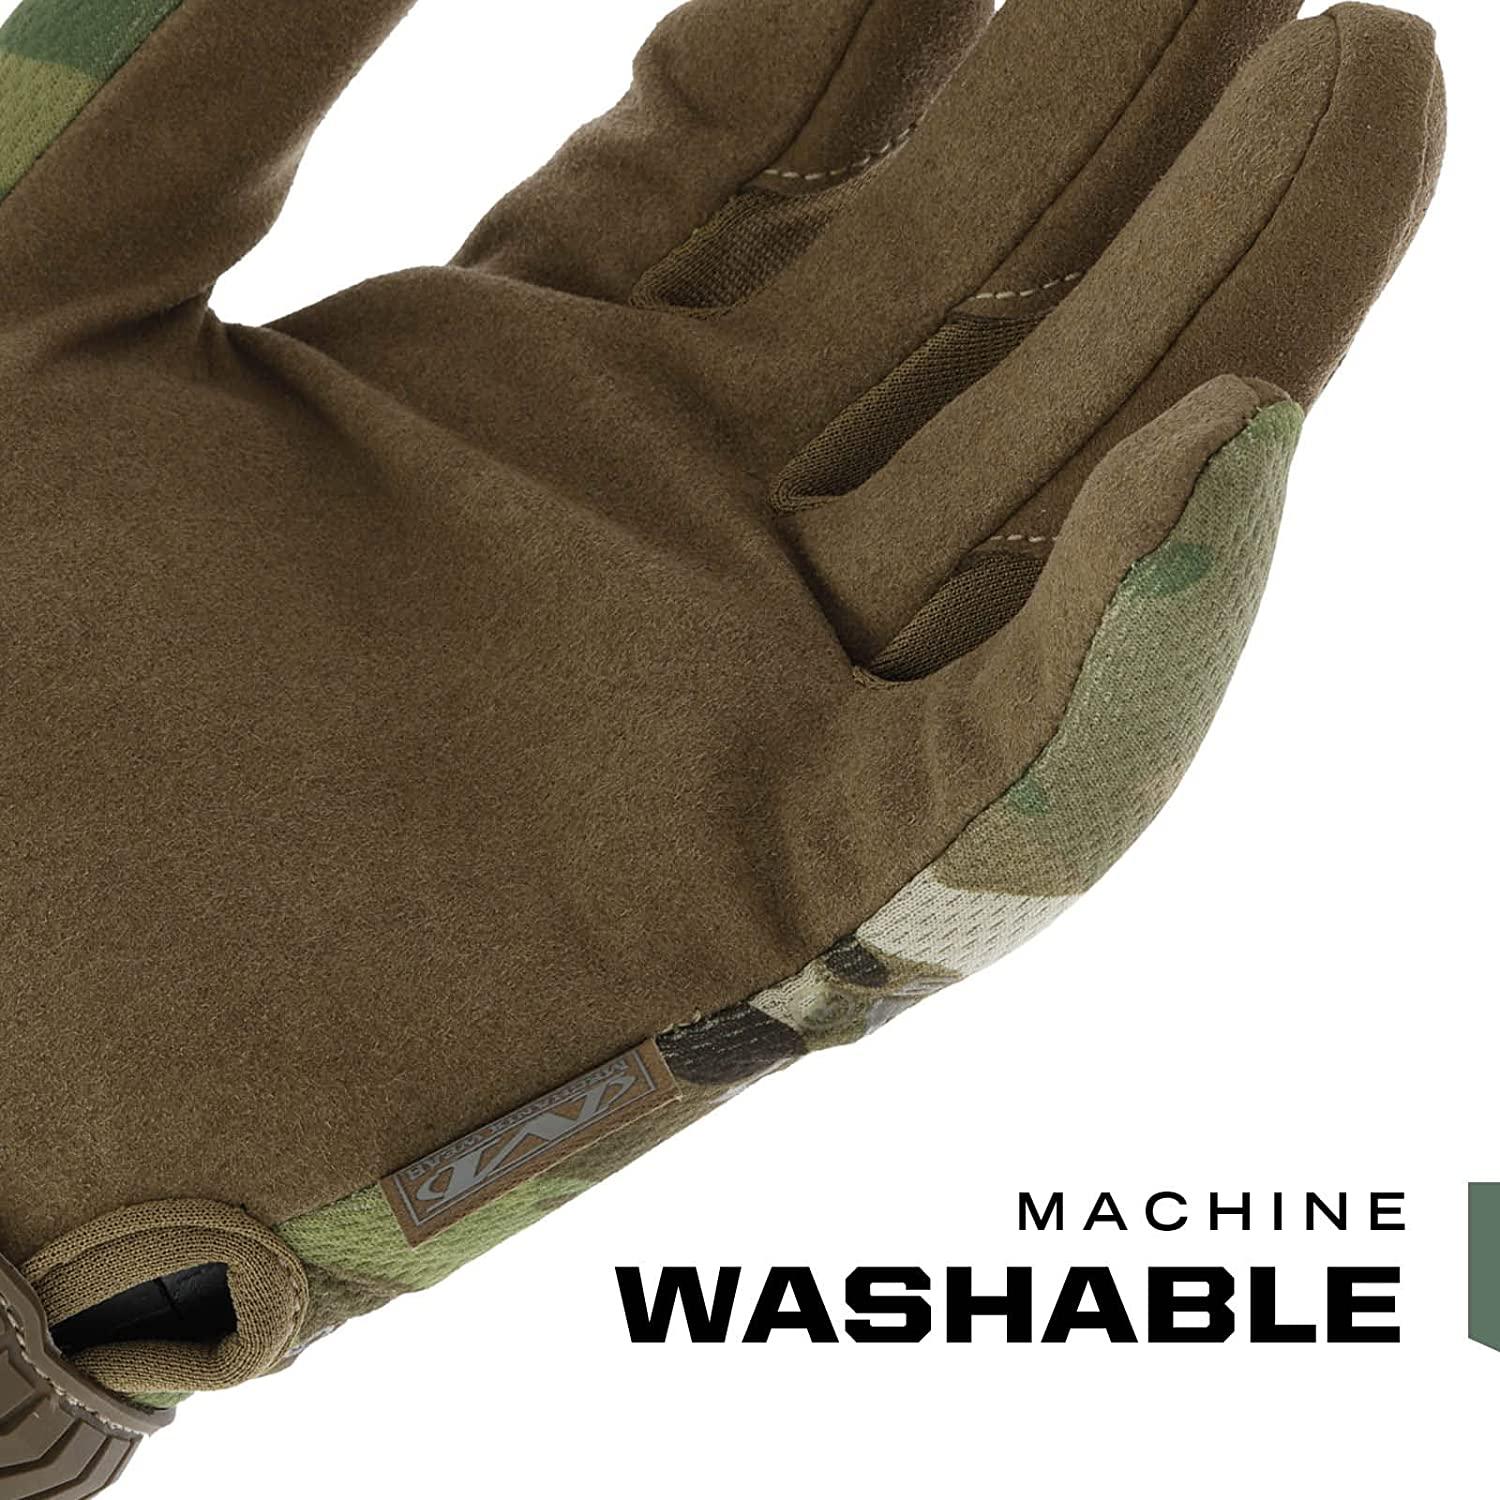 Mechanix Wear Gloves M-Pact multicam, Mechanix Wear Gloves M-Pact multicam, Tactical Gloves, Gloves, Men